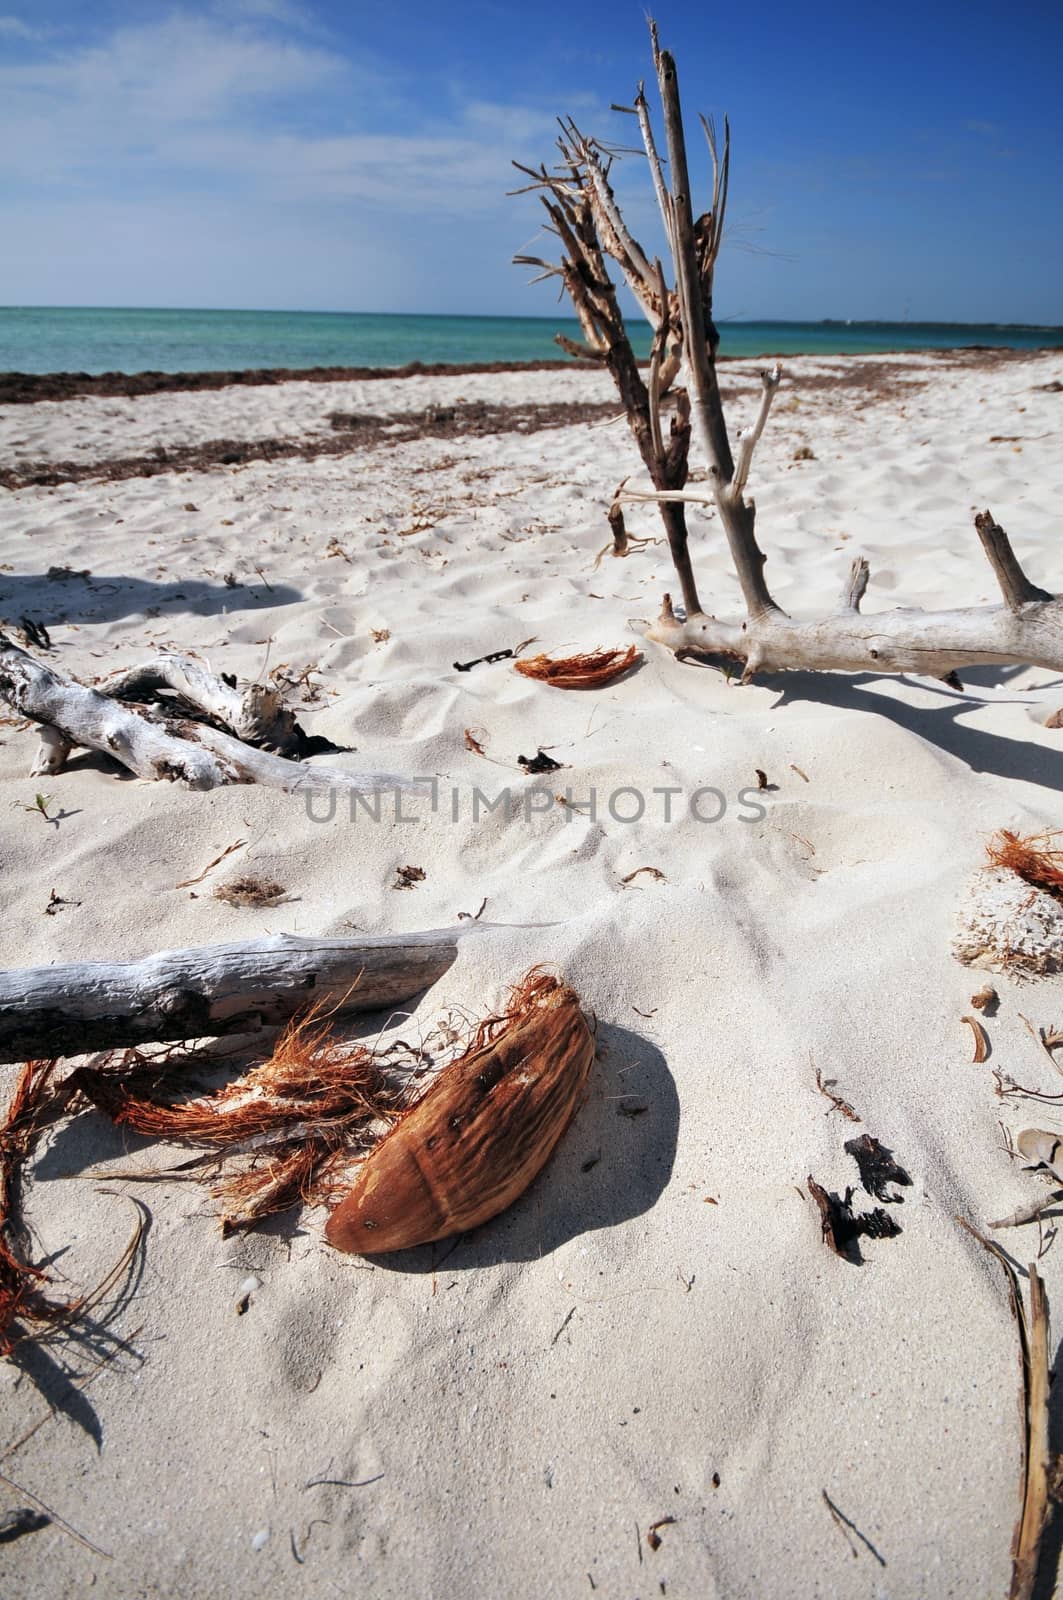 White Sands of South Florida Beaches. Florida USA